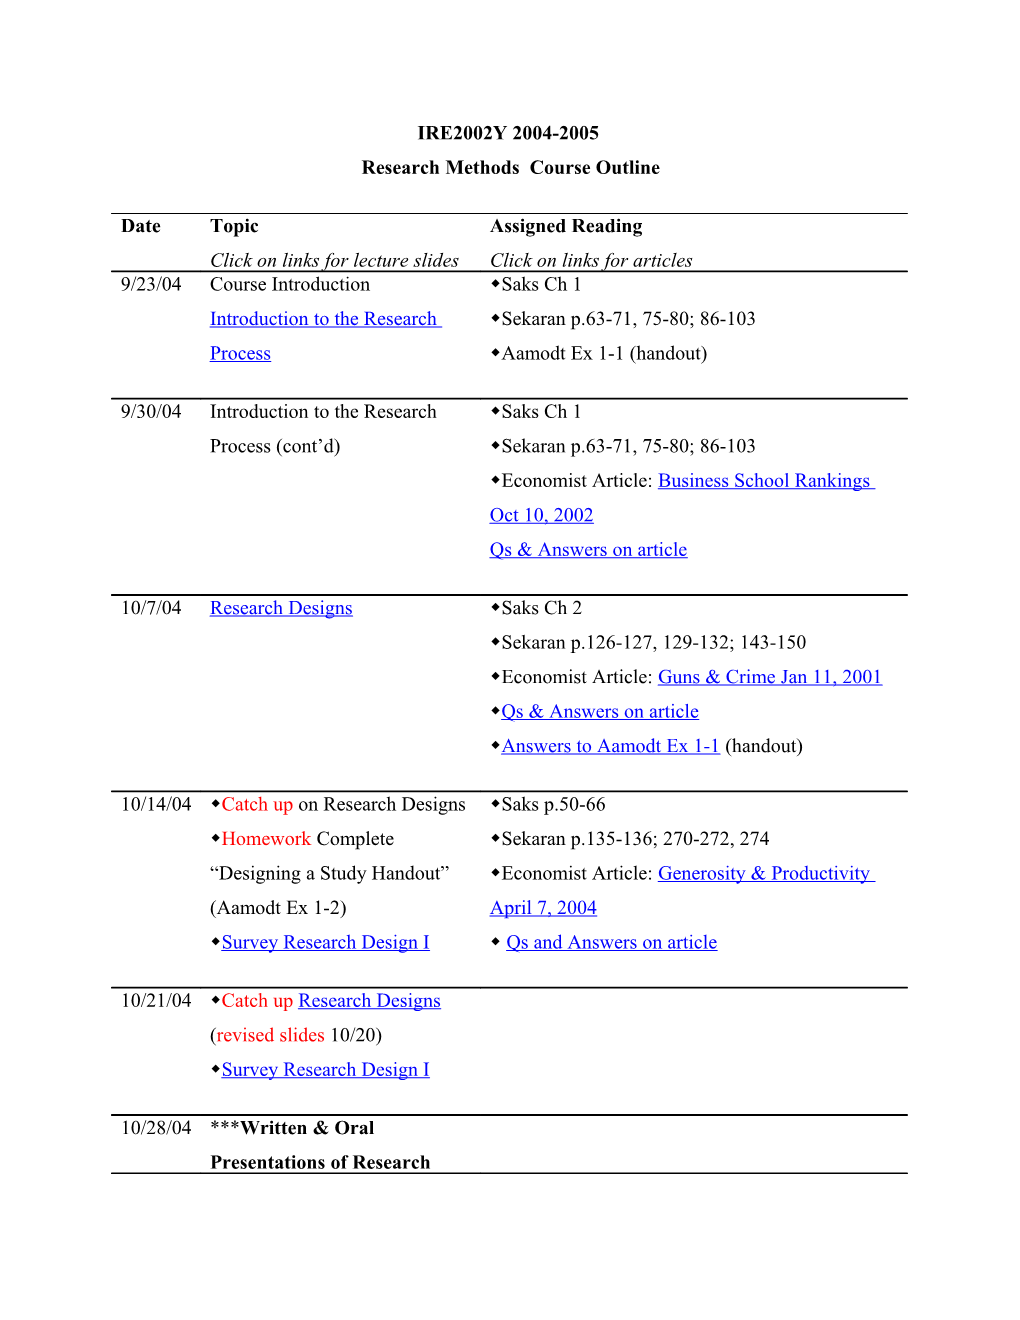 Research Methods in Industrial Relations: Ire 2002Y